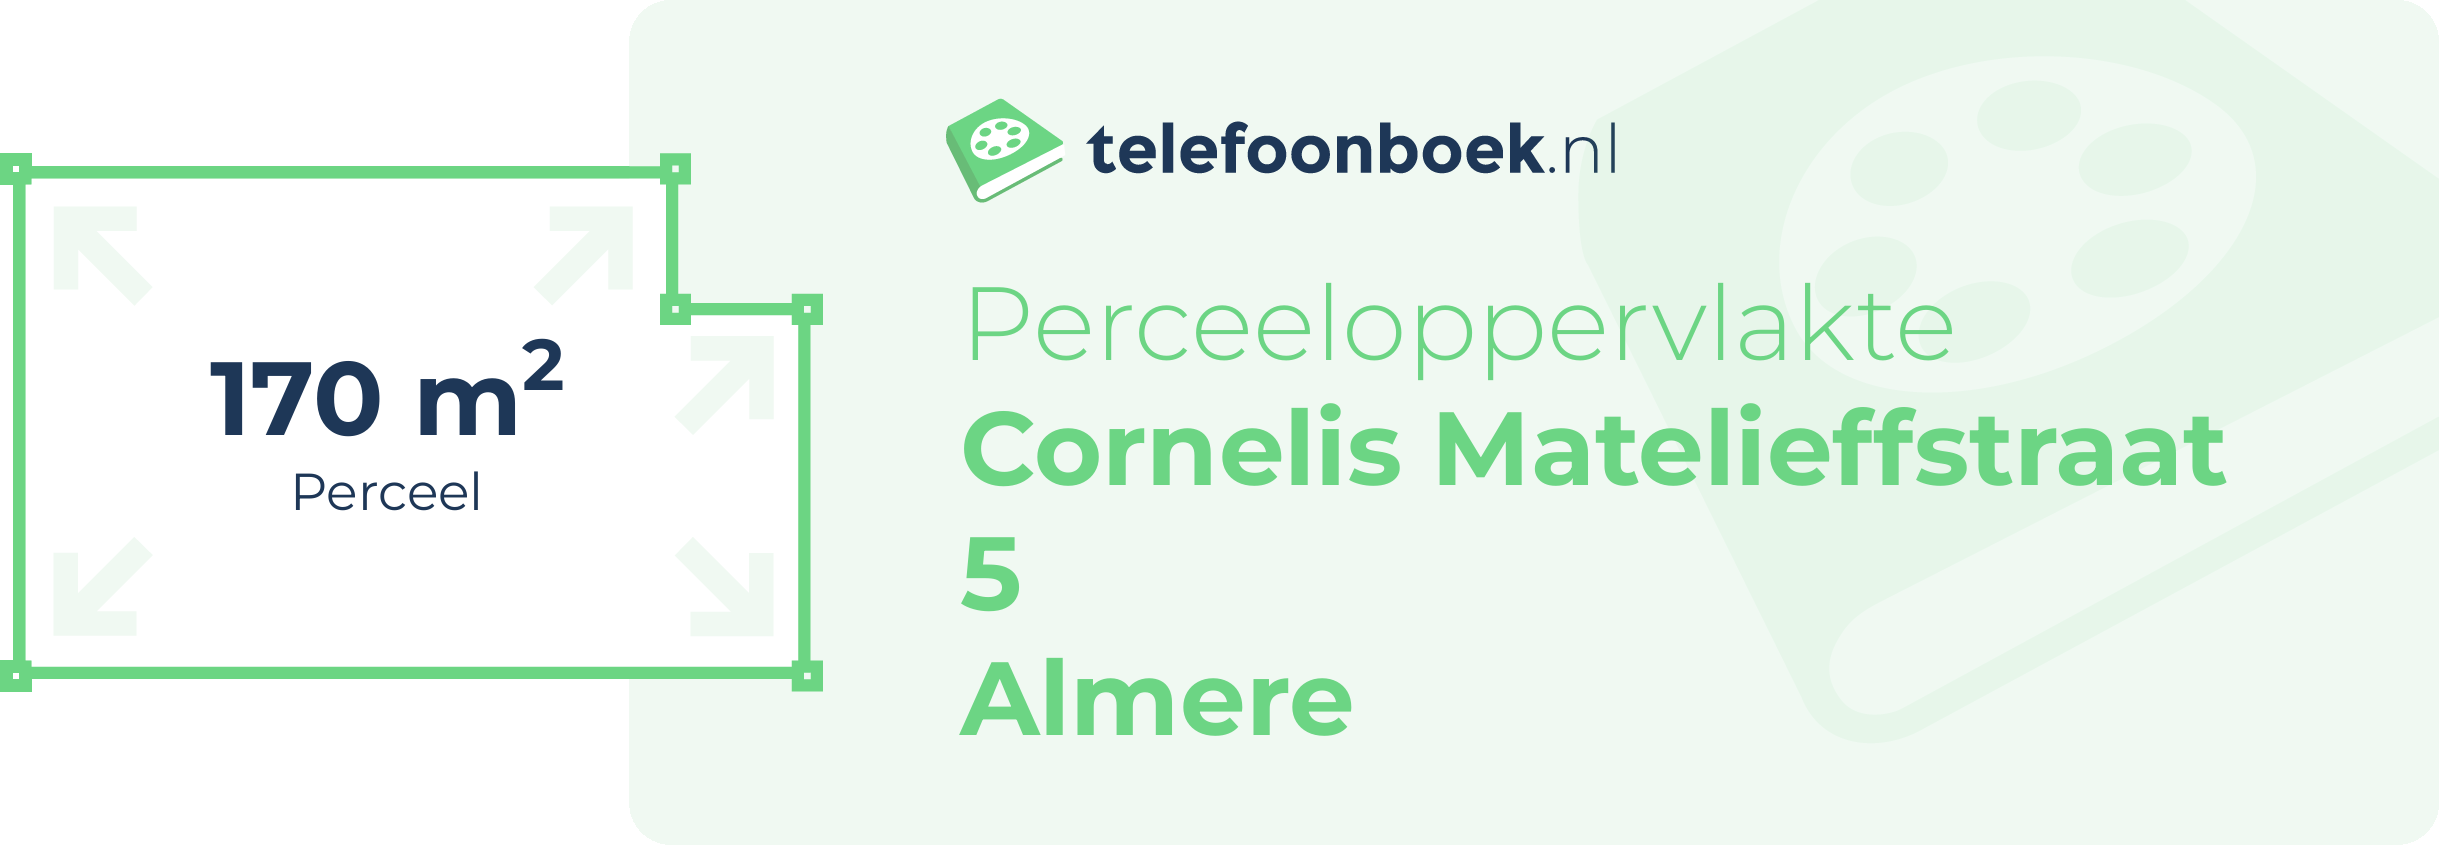 Perceeloppervlakte Cornelis Matelieffstraat 5 Almere